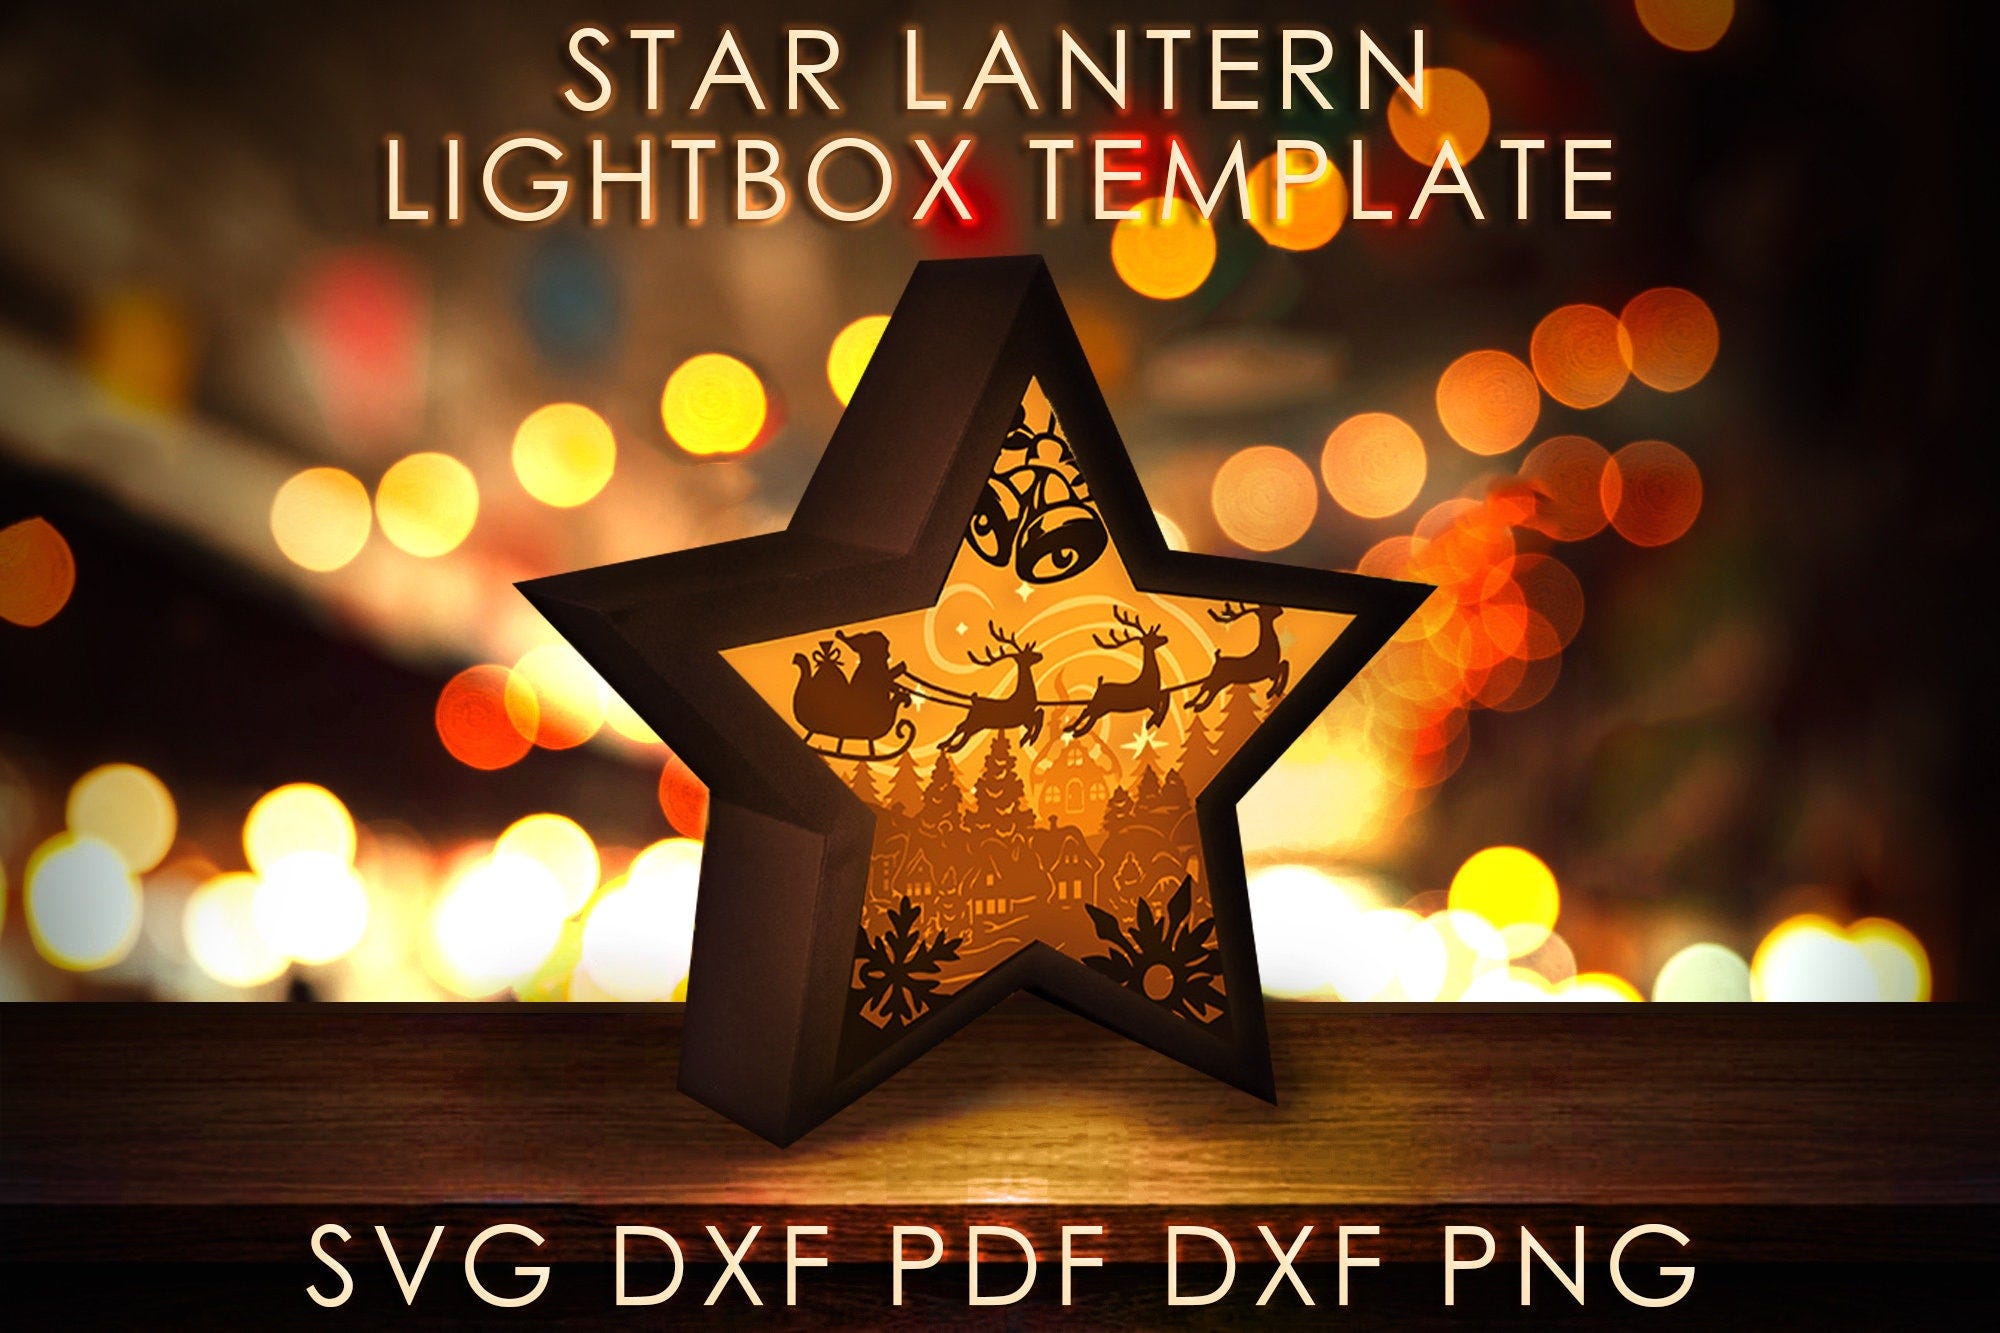 Merry Christmas Star Lantern Shadow box SVG Template, X-mas Papercut Lightbox cricut SVG, 3D layered Paper cut Light box DXF Papercraft